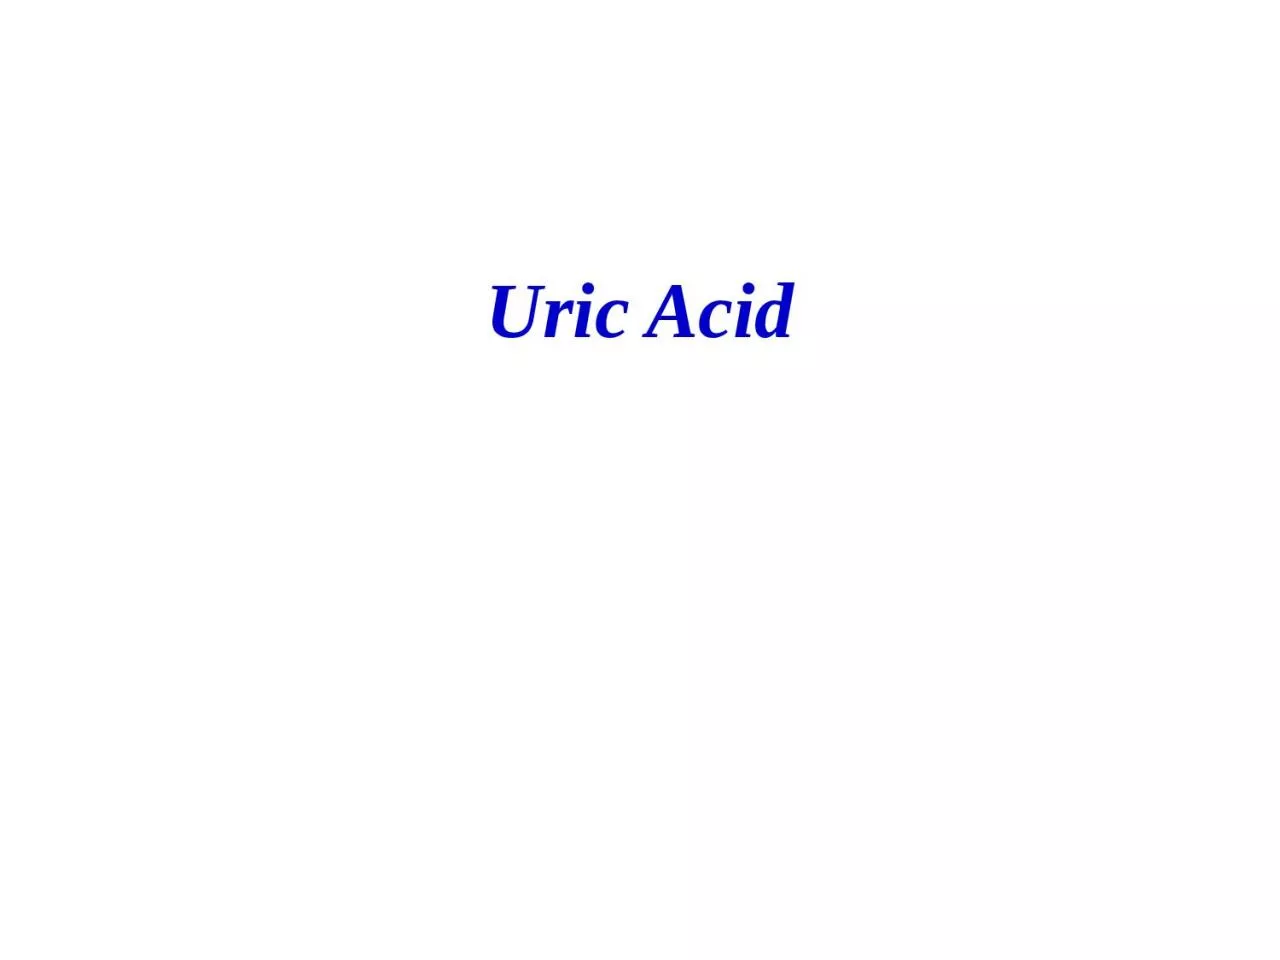 Uric Acid What is uric acid?